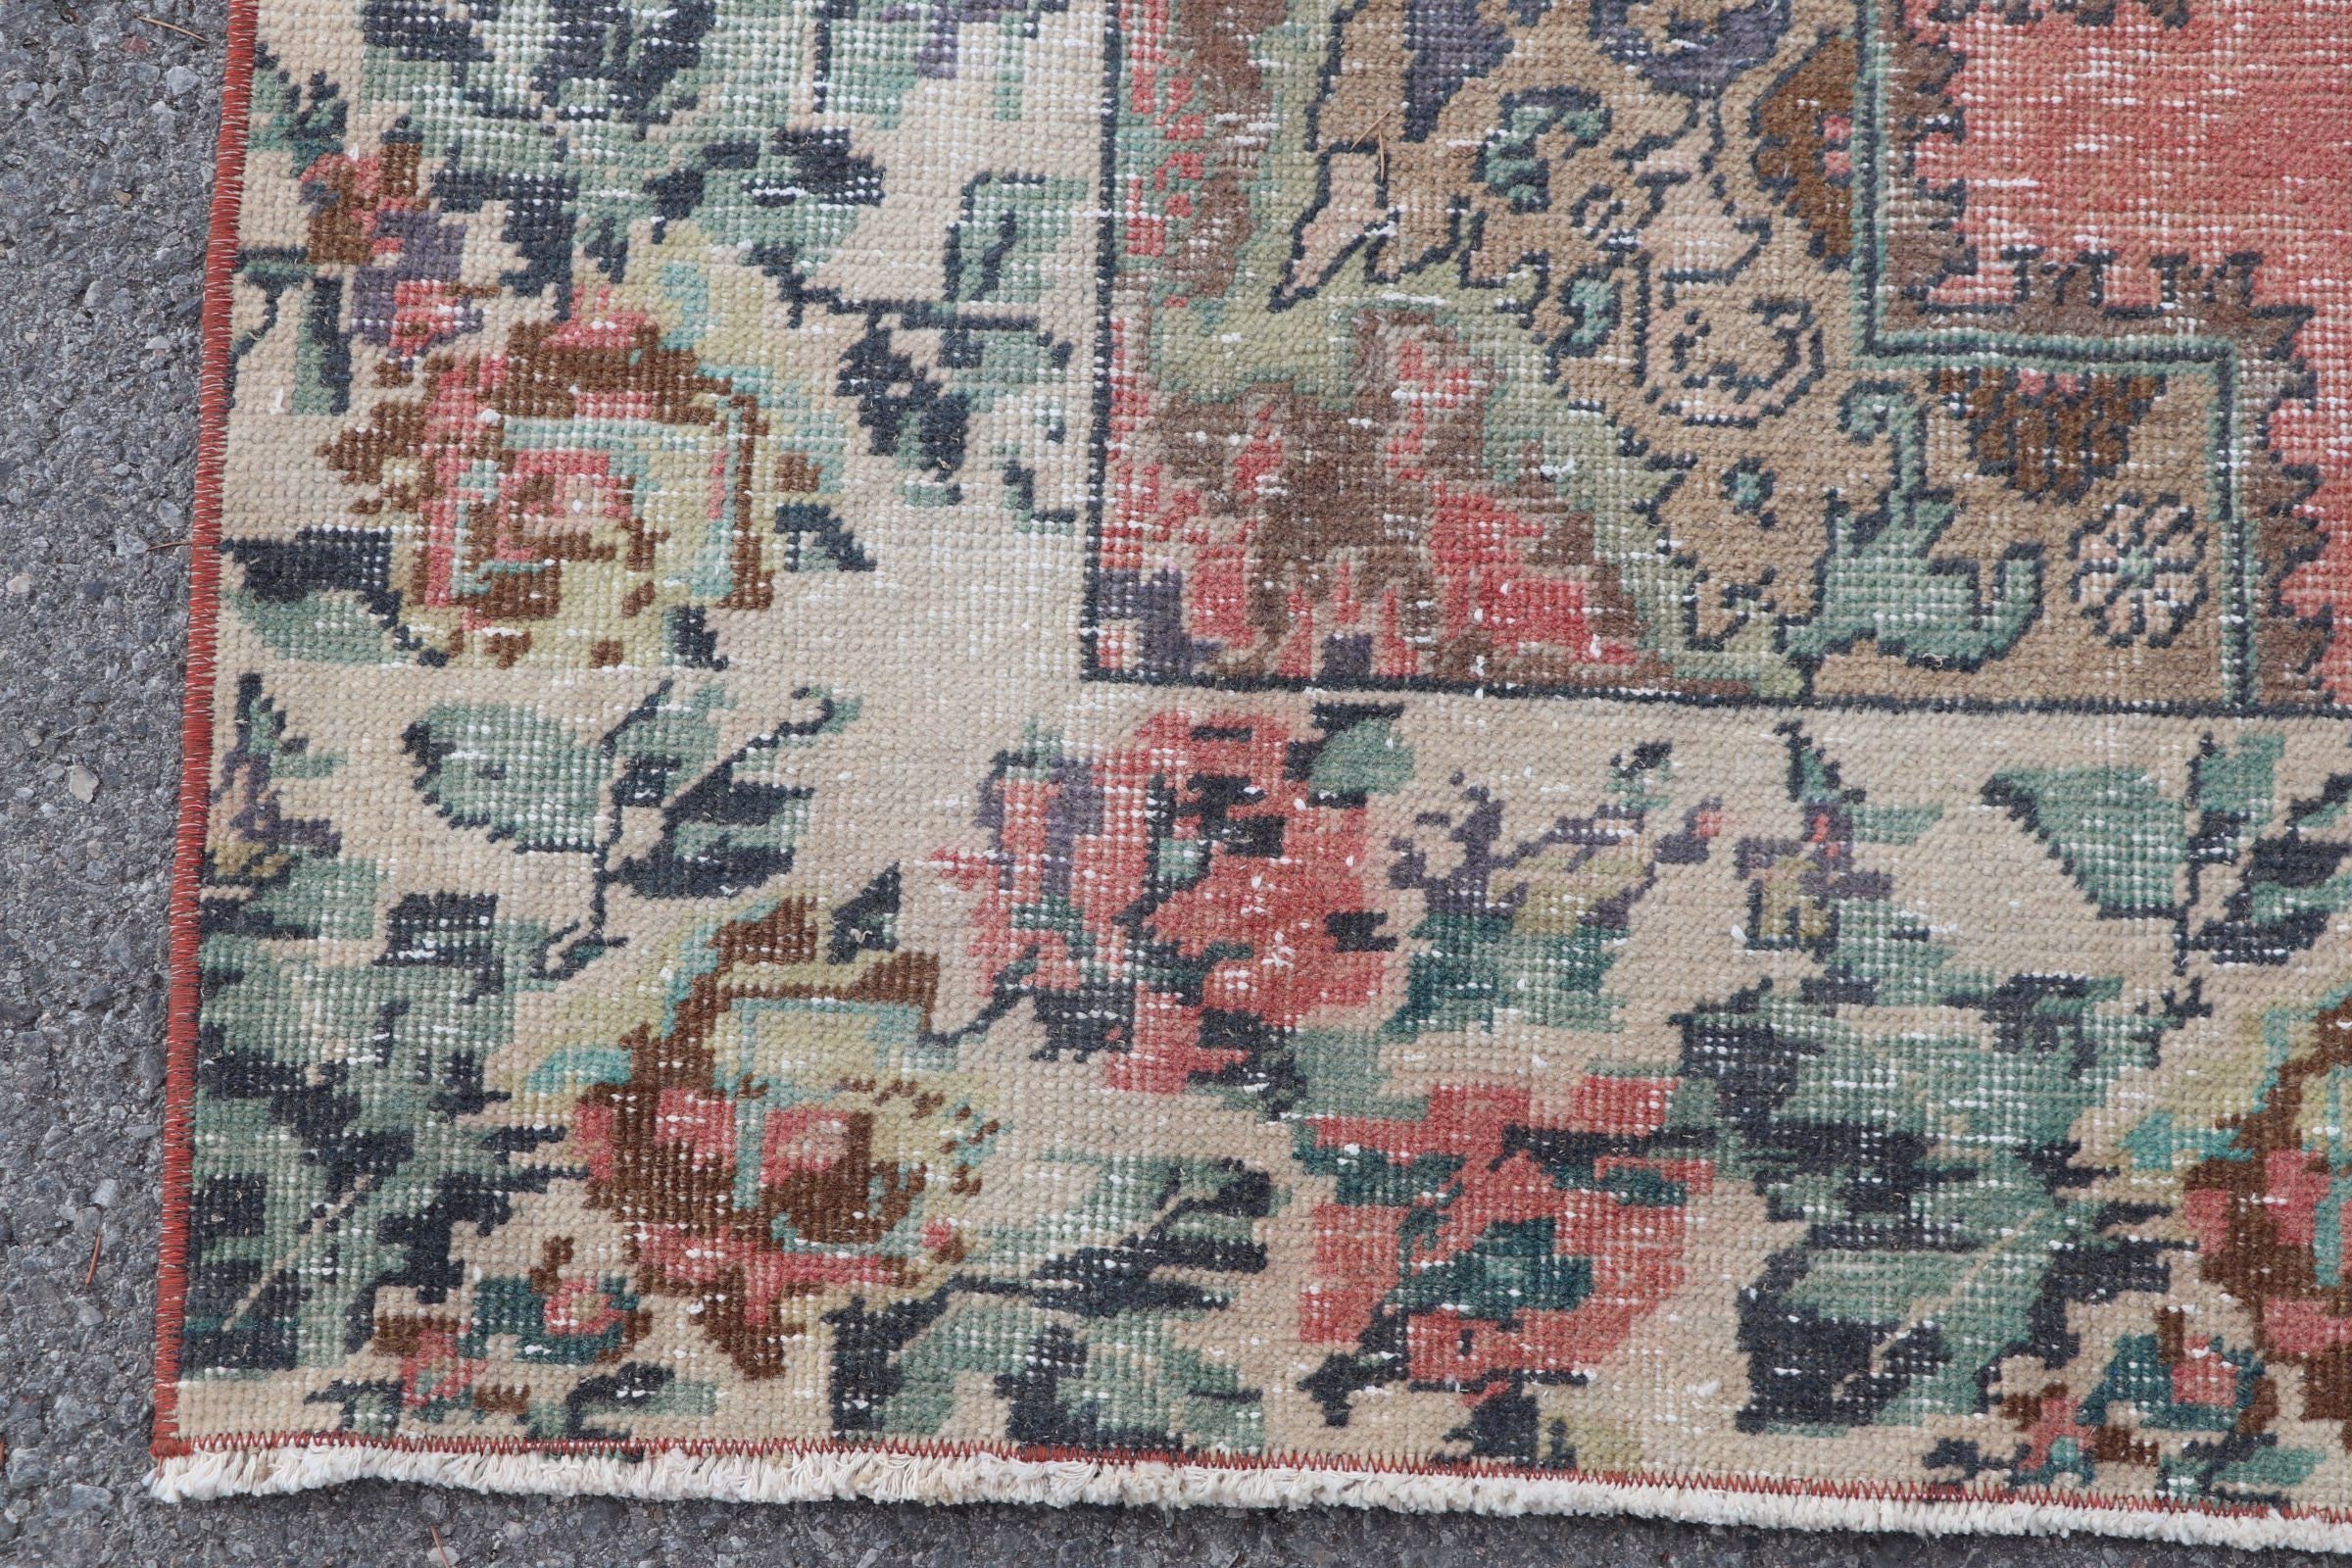 Bedroom Rug, Pink Floor Rug, Anatolian Rugs, Rugs for Area, Home Decor Rugs, Turkish Rugs, 4.3x6.8 ft Area Rugs, Vintage Rug, Nomadic Rug